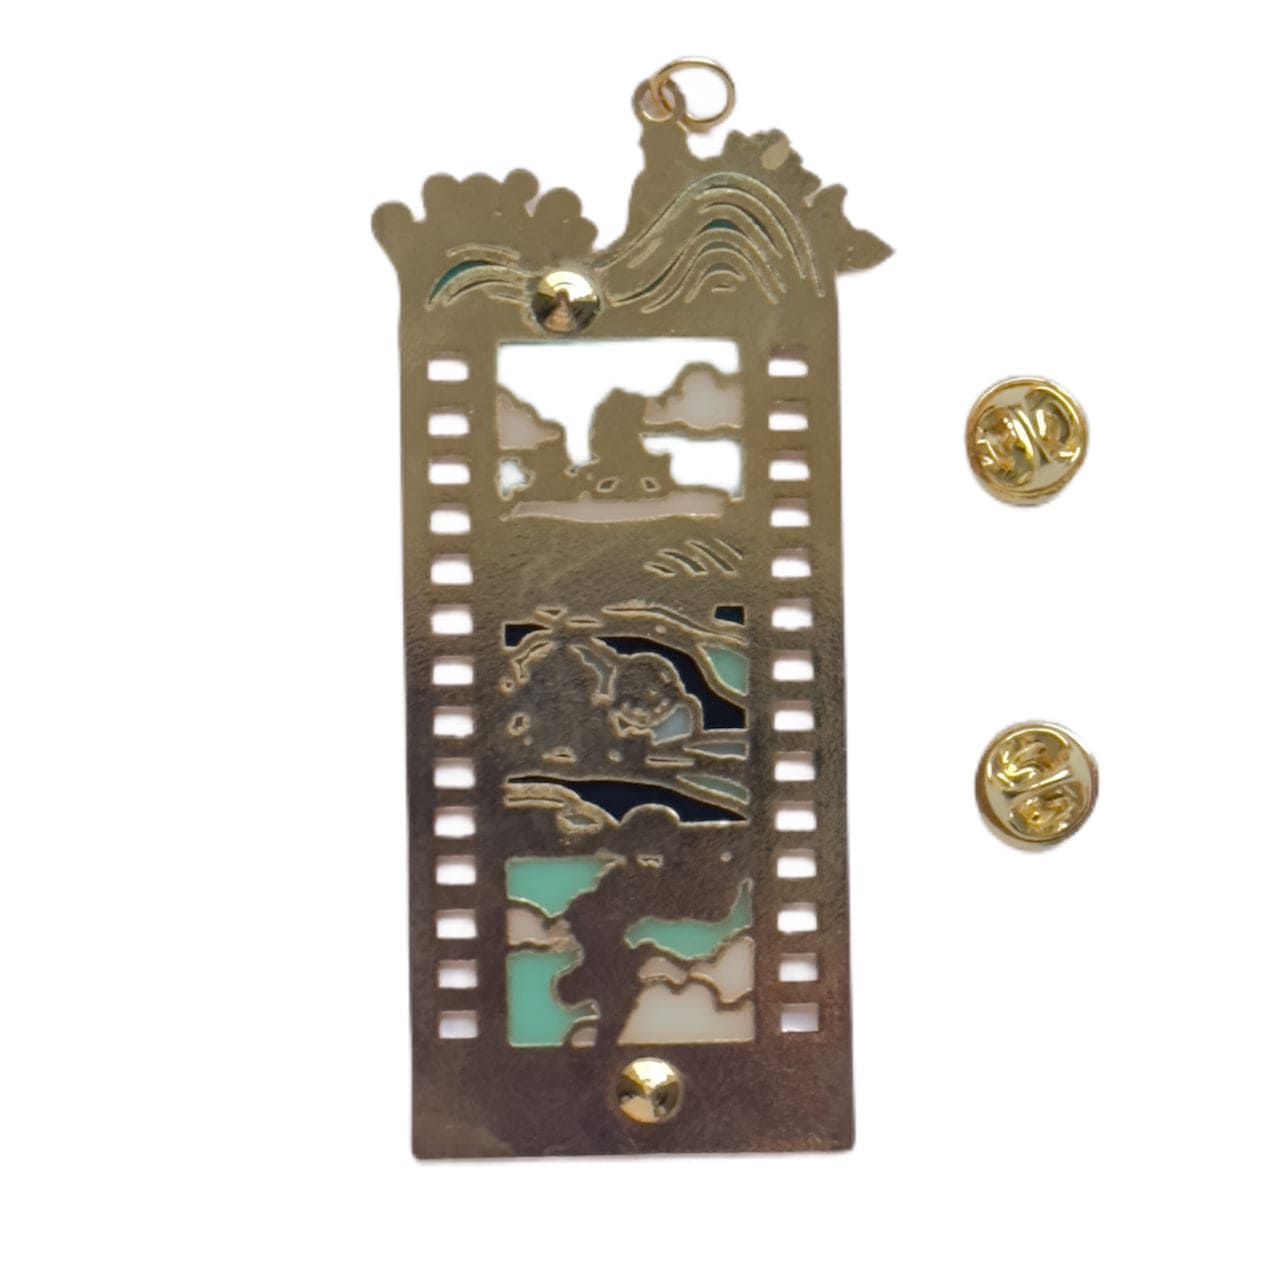 pinbuds Enamel Pin (patreon) "Sky Spirits" Film Strip Pin (stainglass)